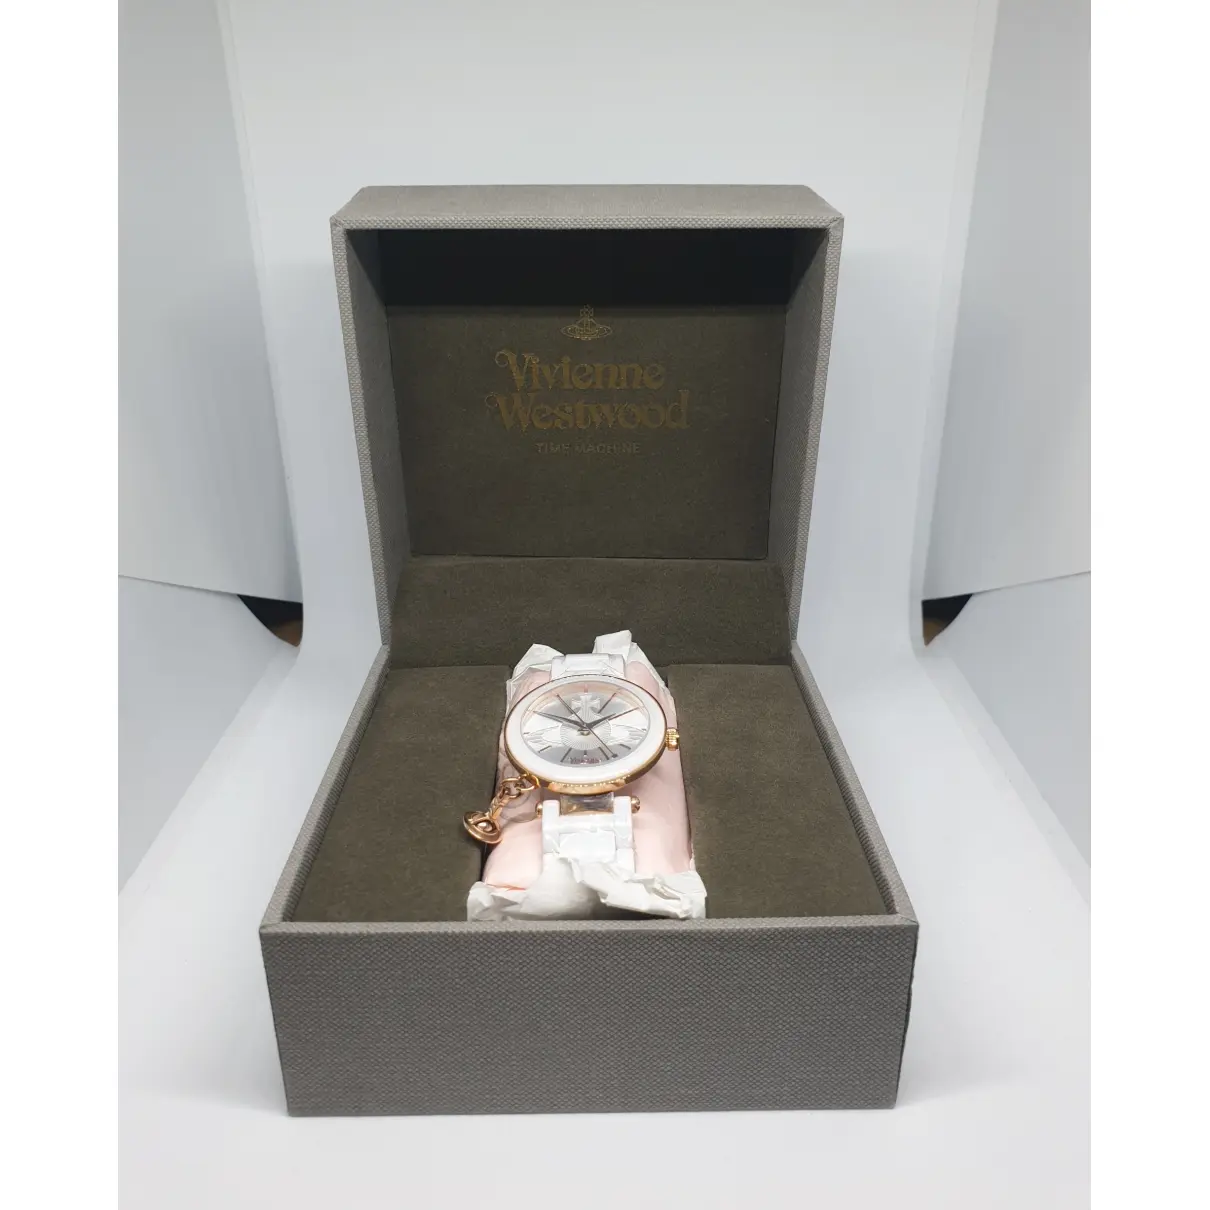 Buy Vivienne Westwood Ceramic watch online